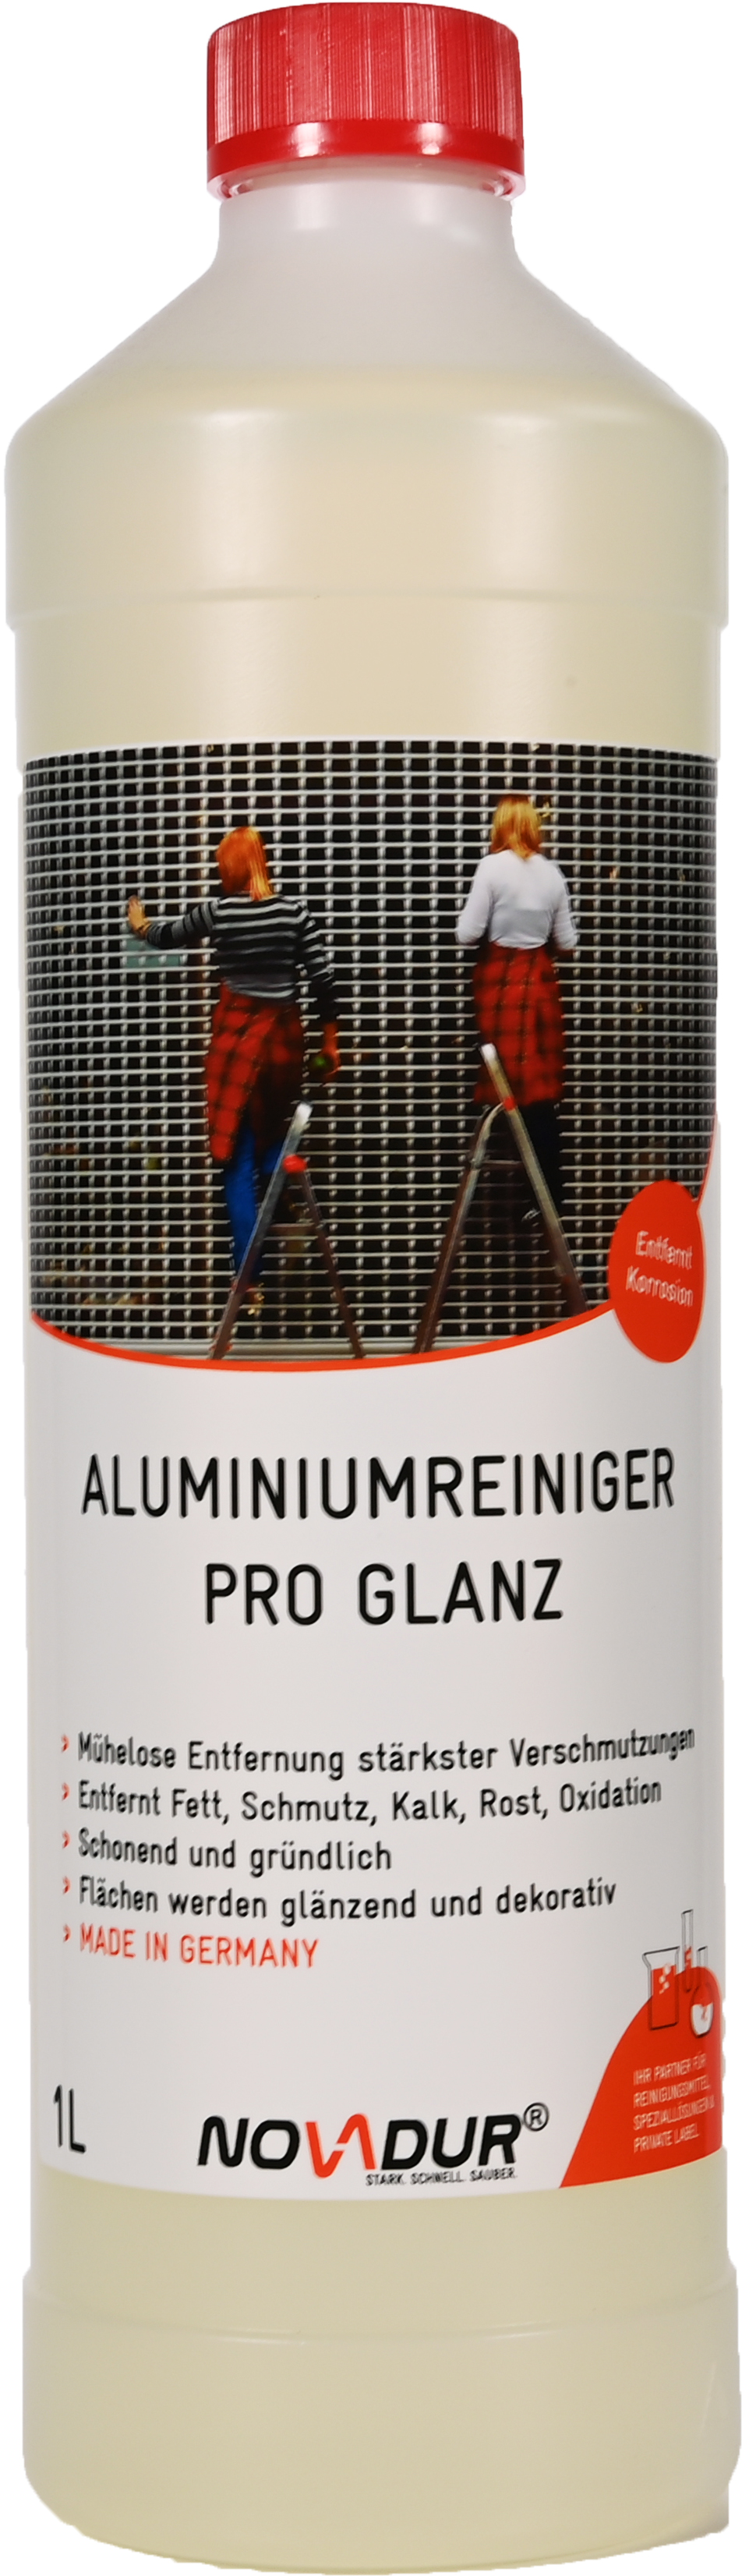 Aluminiumreiniger Pro Glanz